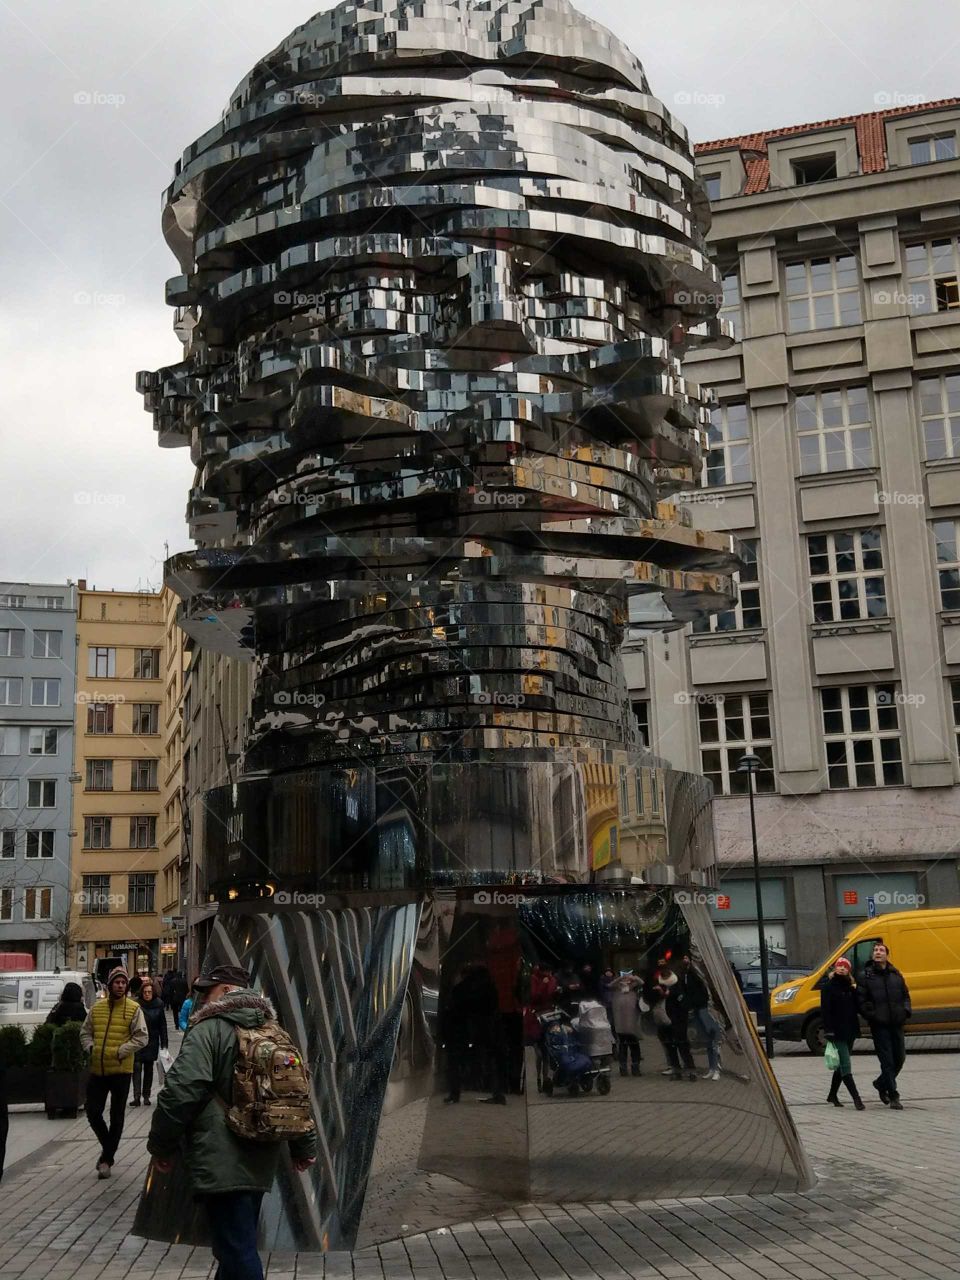 Moving head Statue Prague